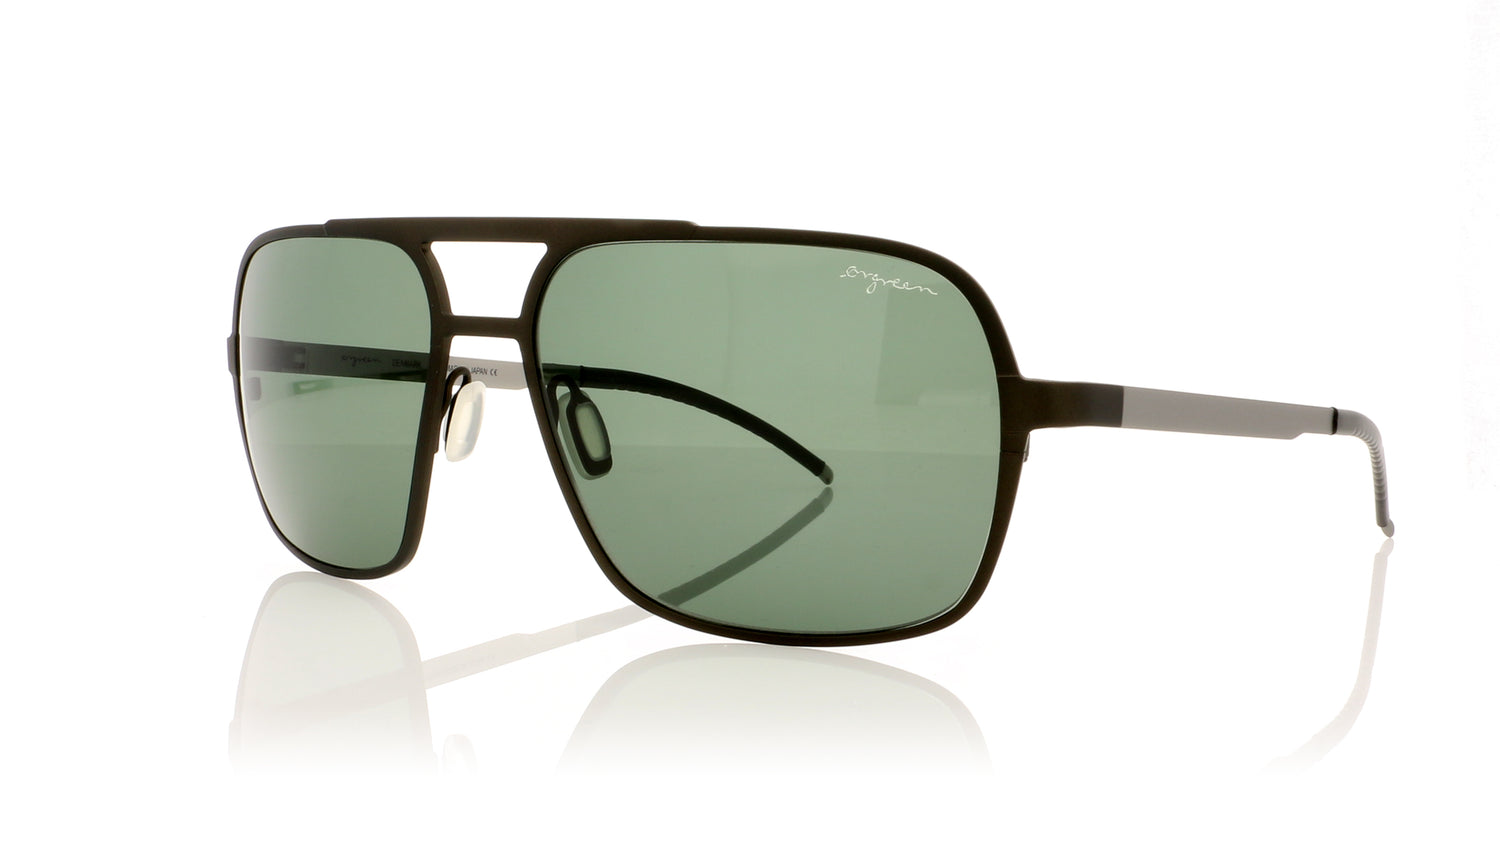 Ørgreen Clint 560 Sandblasted olive brown Sunglasses - Angle